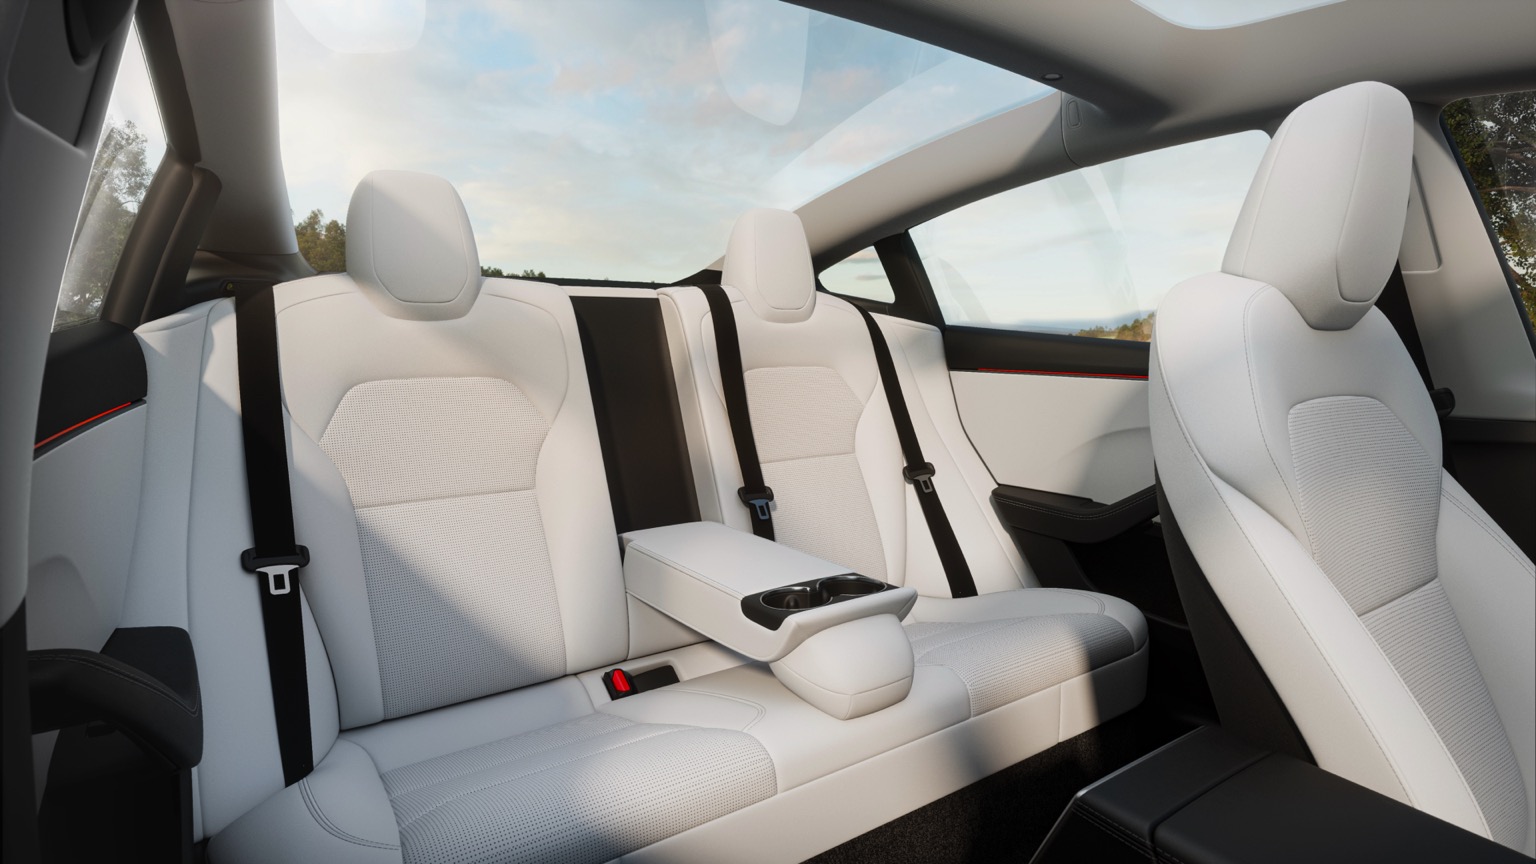 Tesla Model 3 Seating Capacity